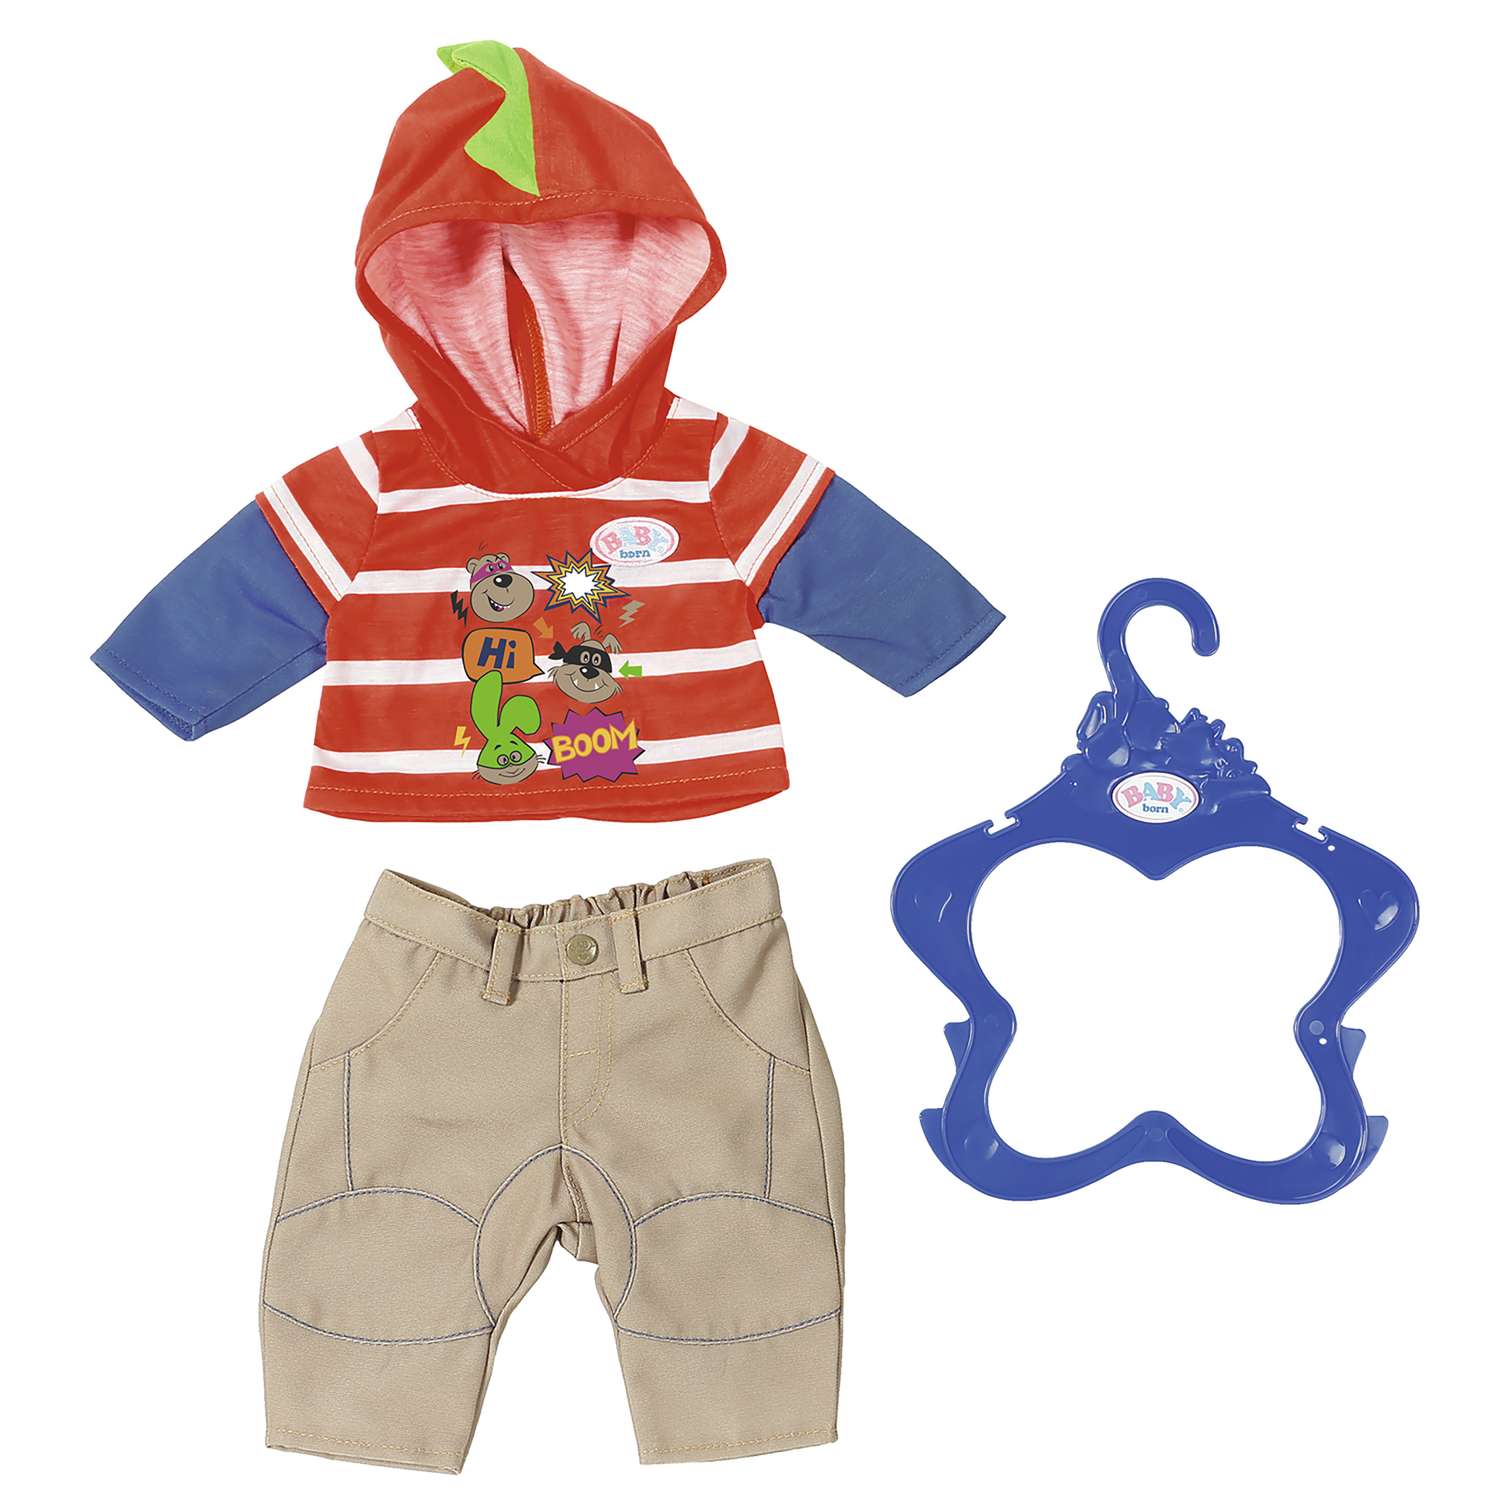 Одежда для кукол Zapf Creation Baby born для мальчика Бежевая 824-535B 824-535B - фото 1